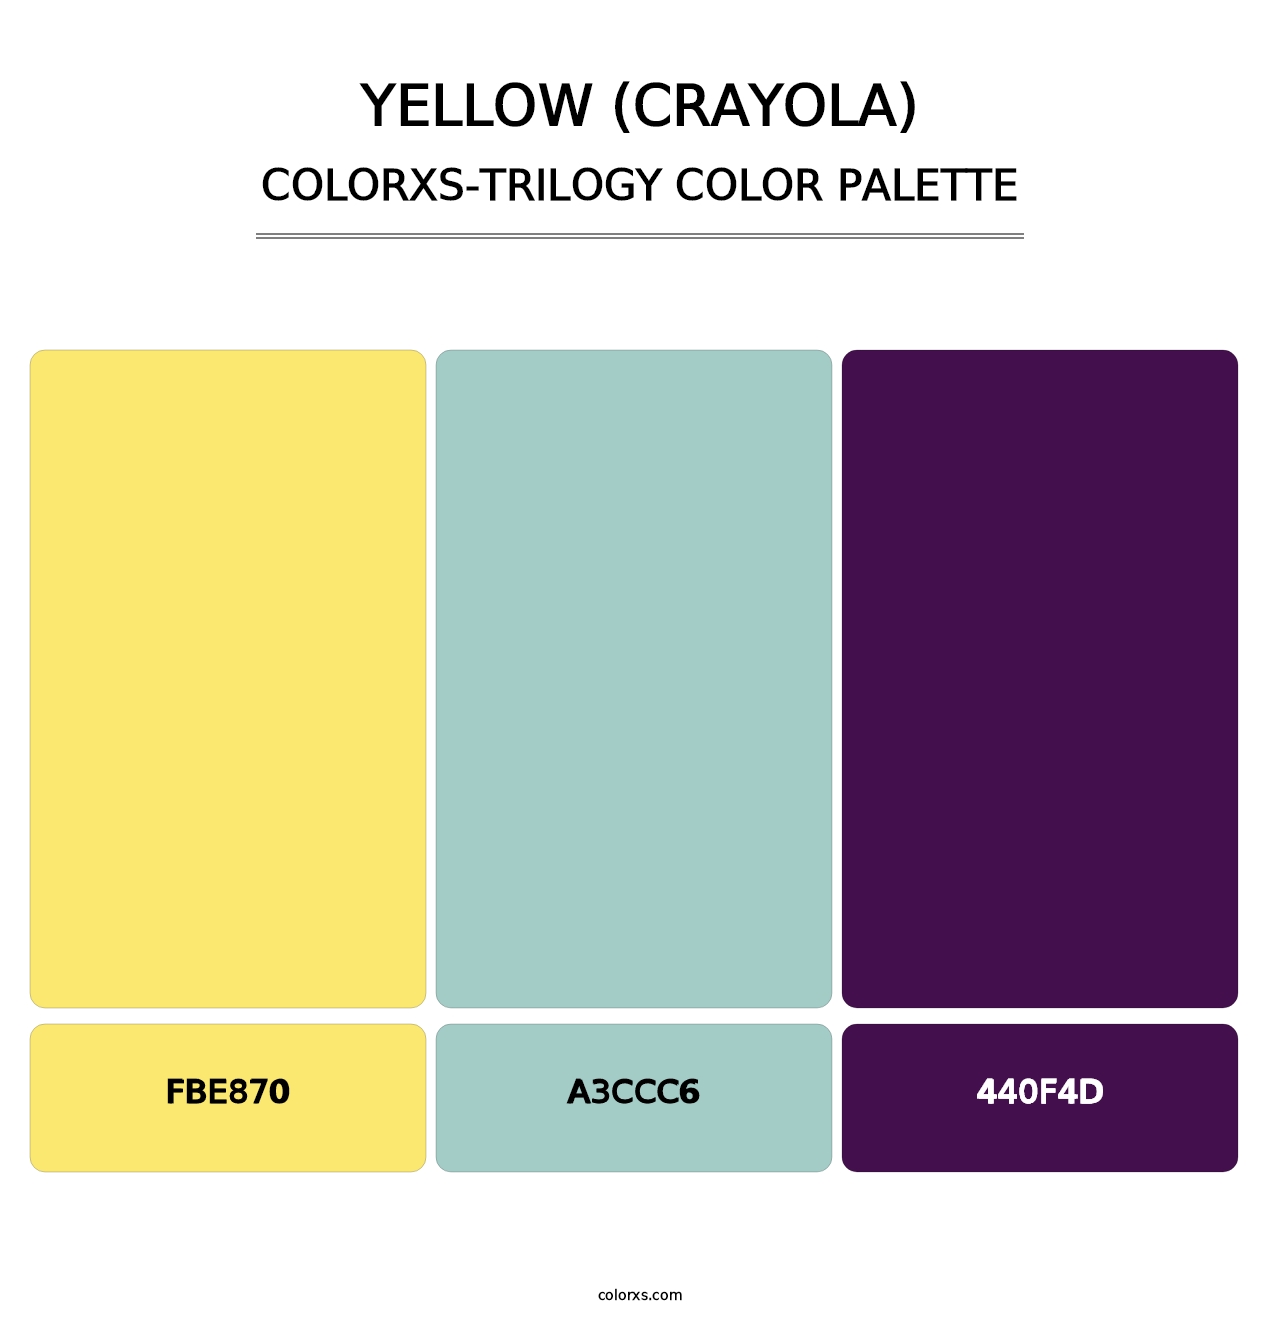 Yellow (Crayola) - Colorxs Trilogy Palette